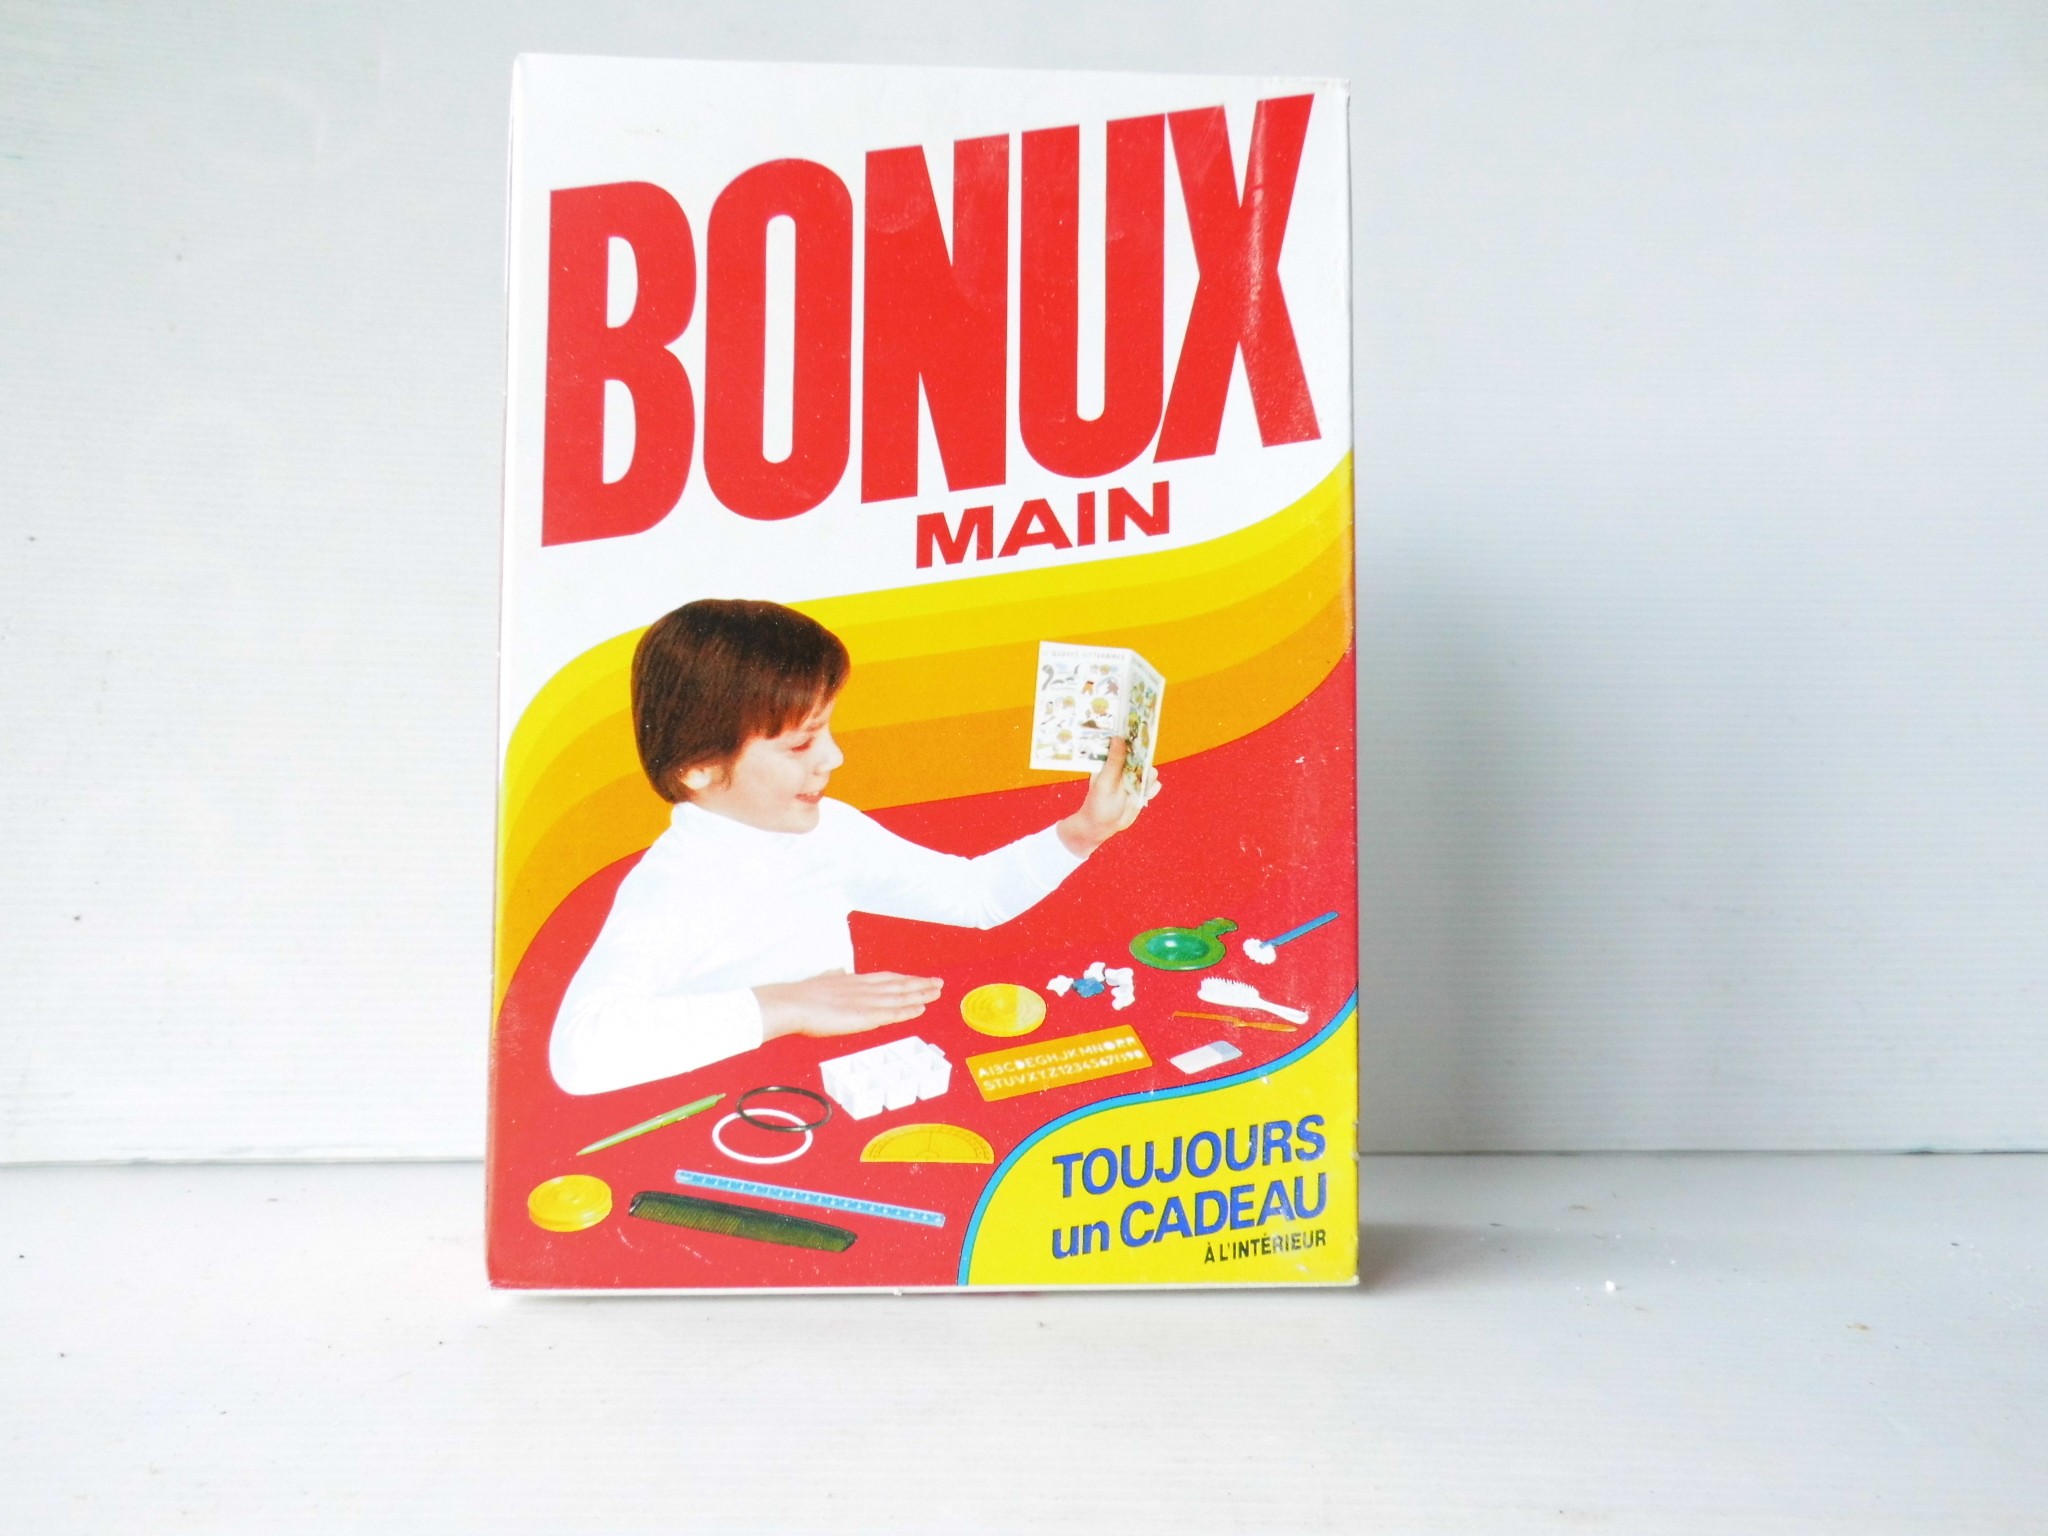 Paquet neuf de BONUX MAIN - Broc23